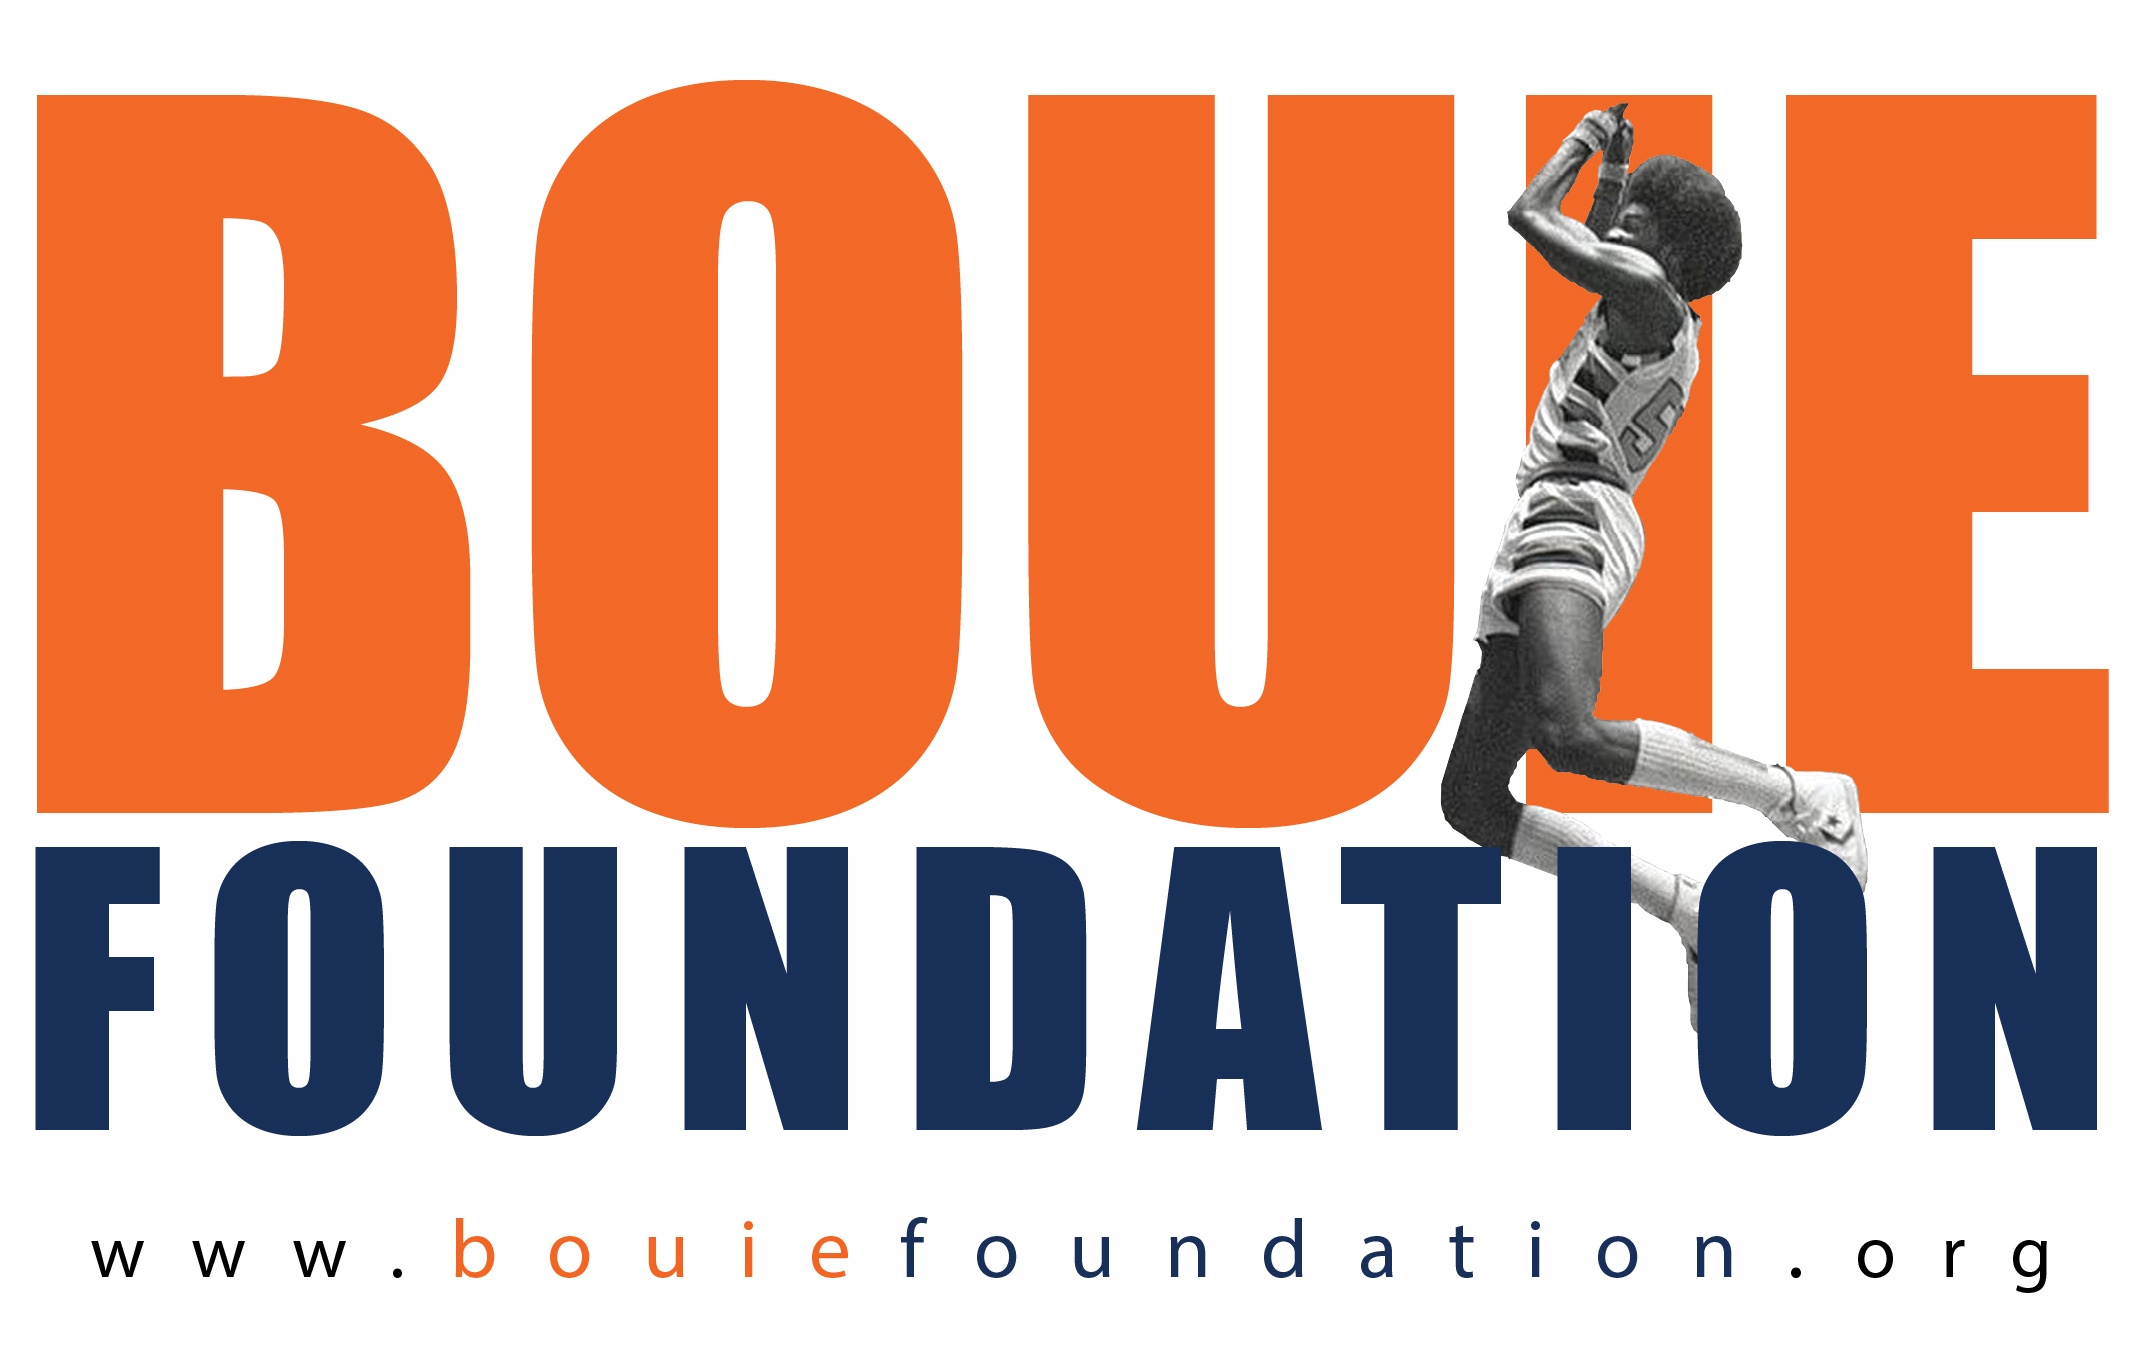 The Bouie Foundation